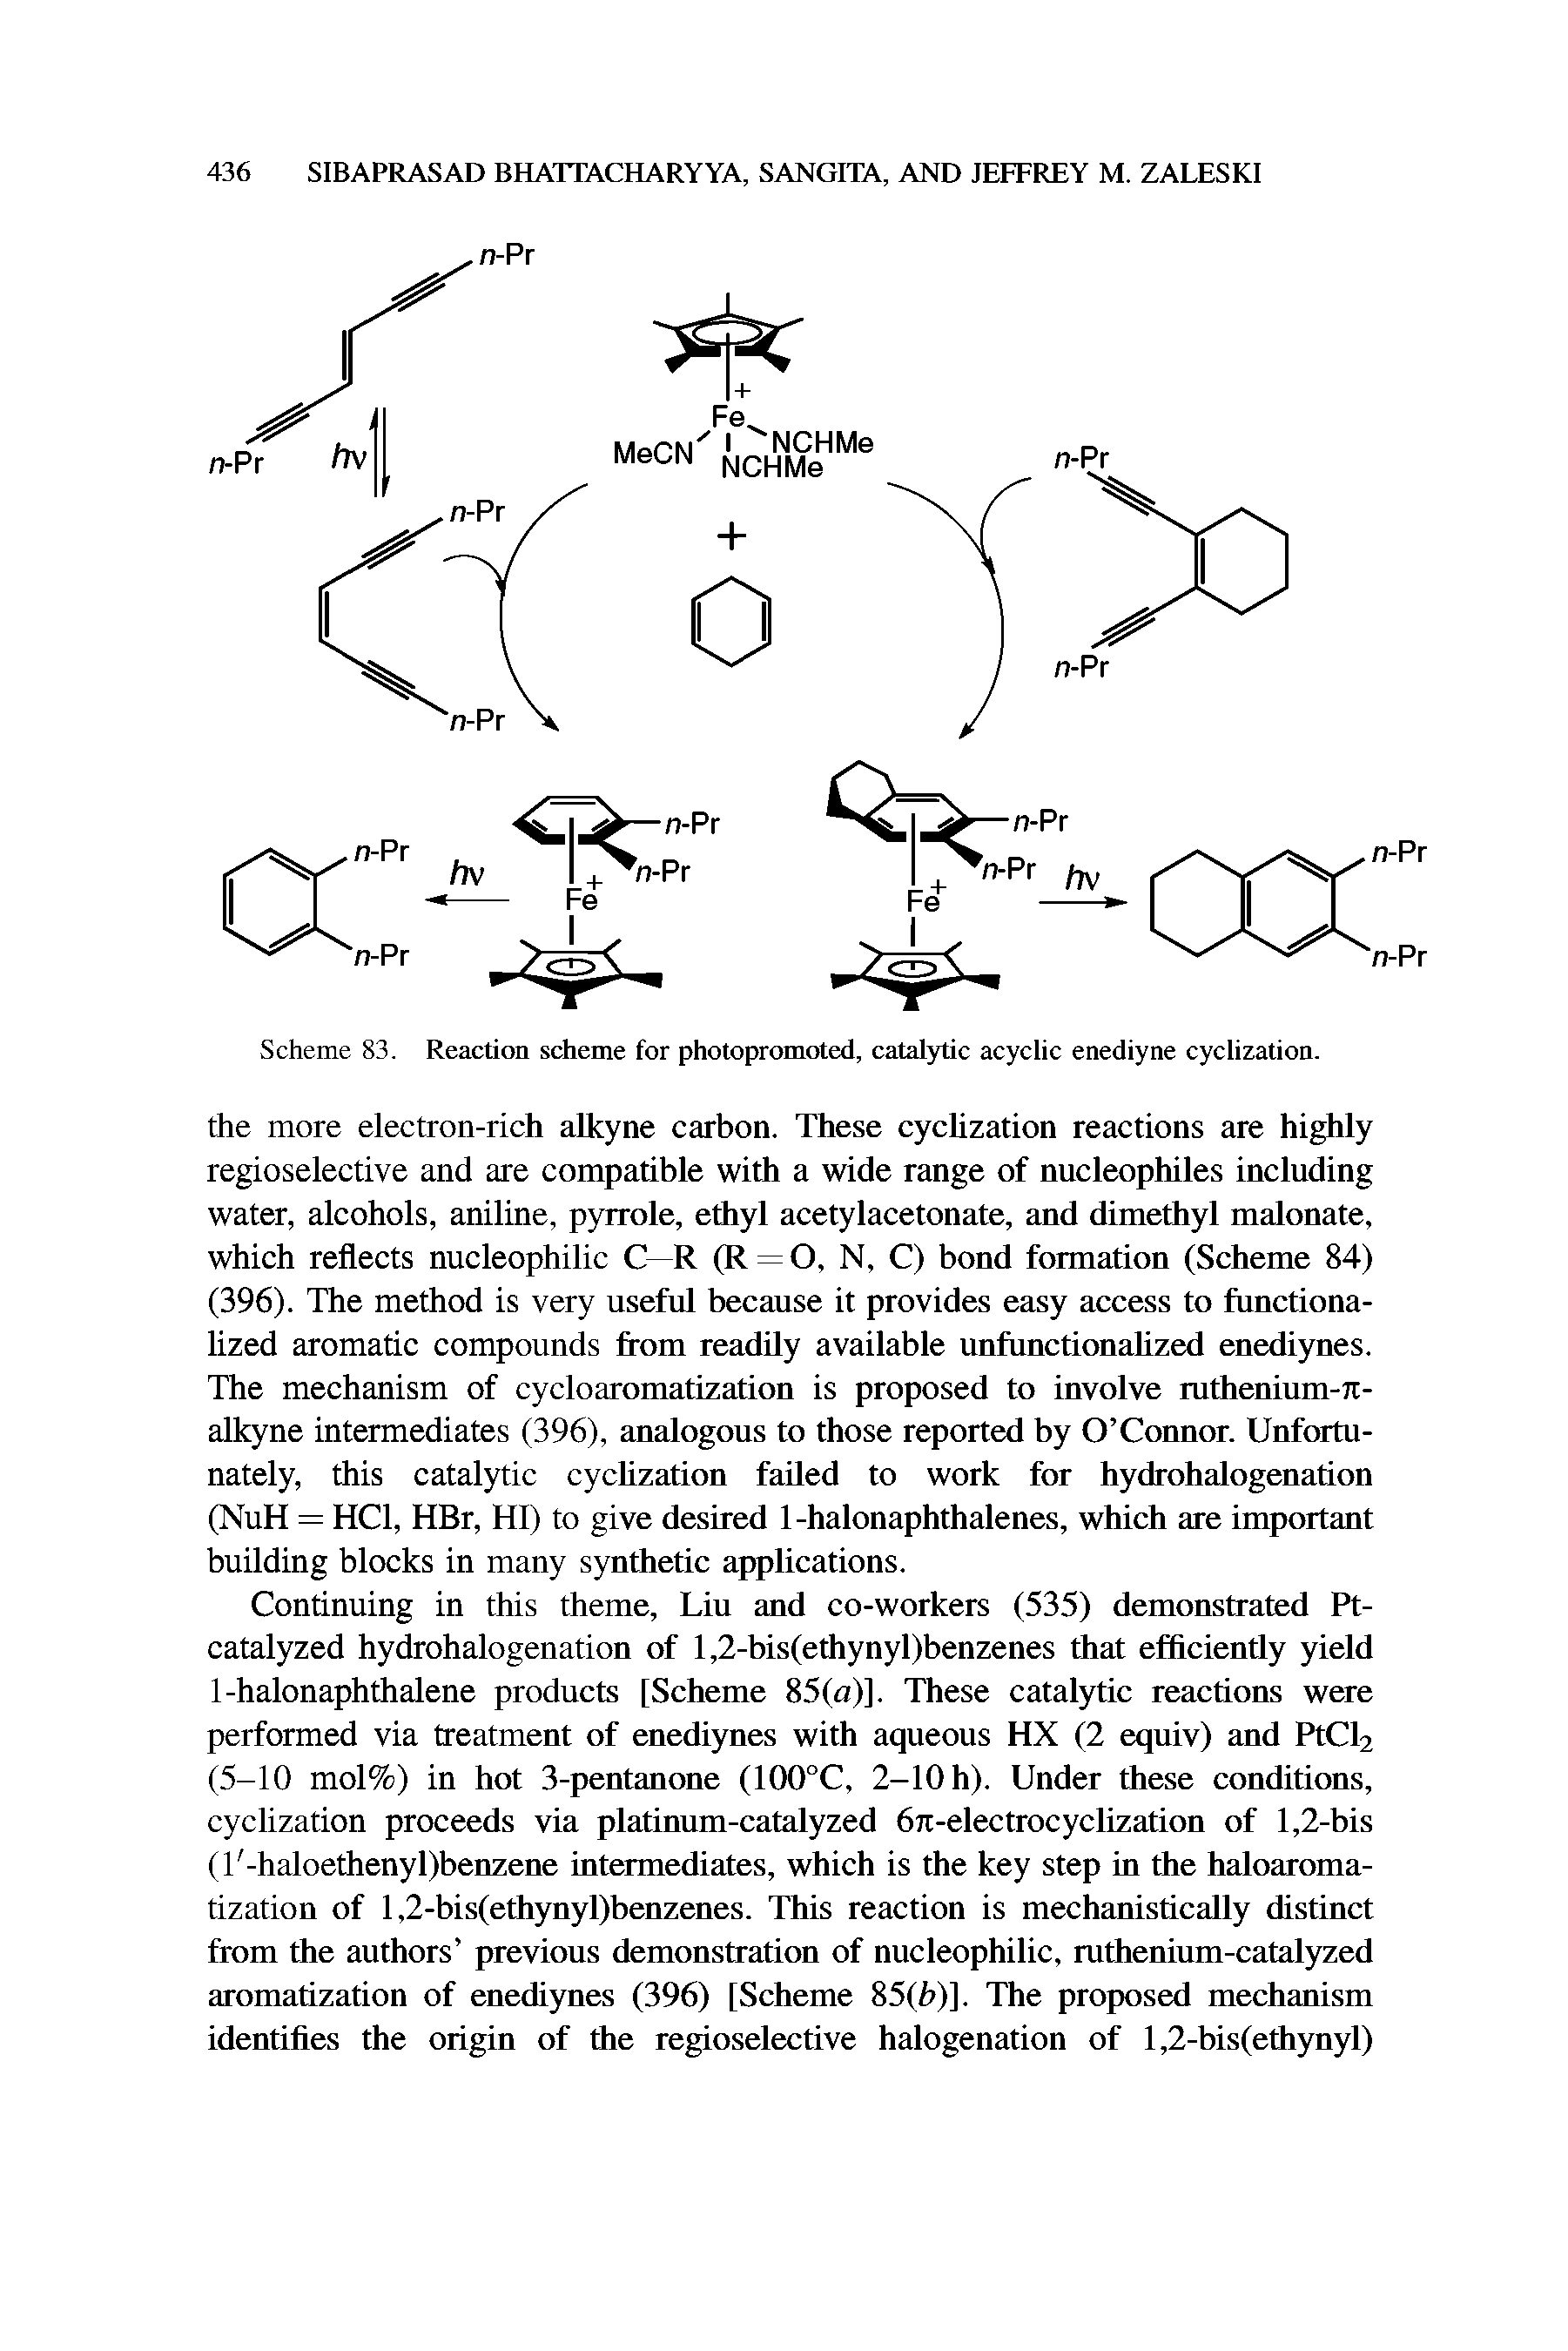 Scheme 83. Reaction scheme for photopromoted, catalytic acyclic enediyne cyclization.